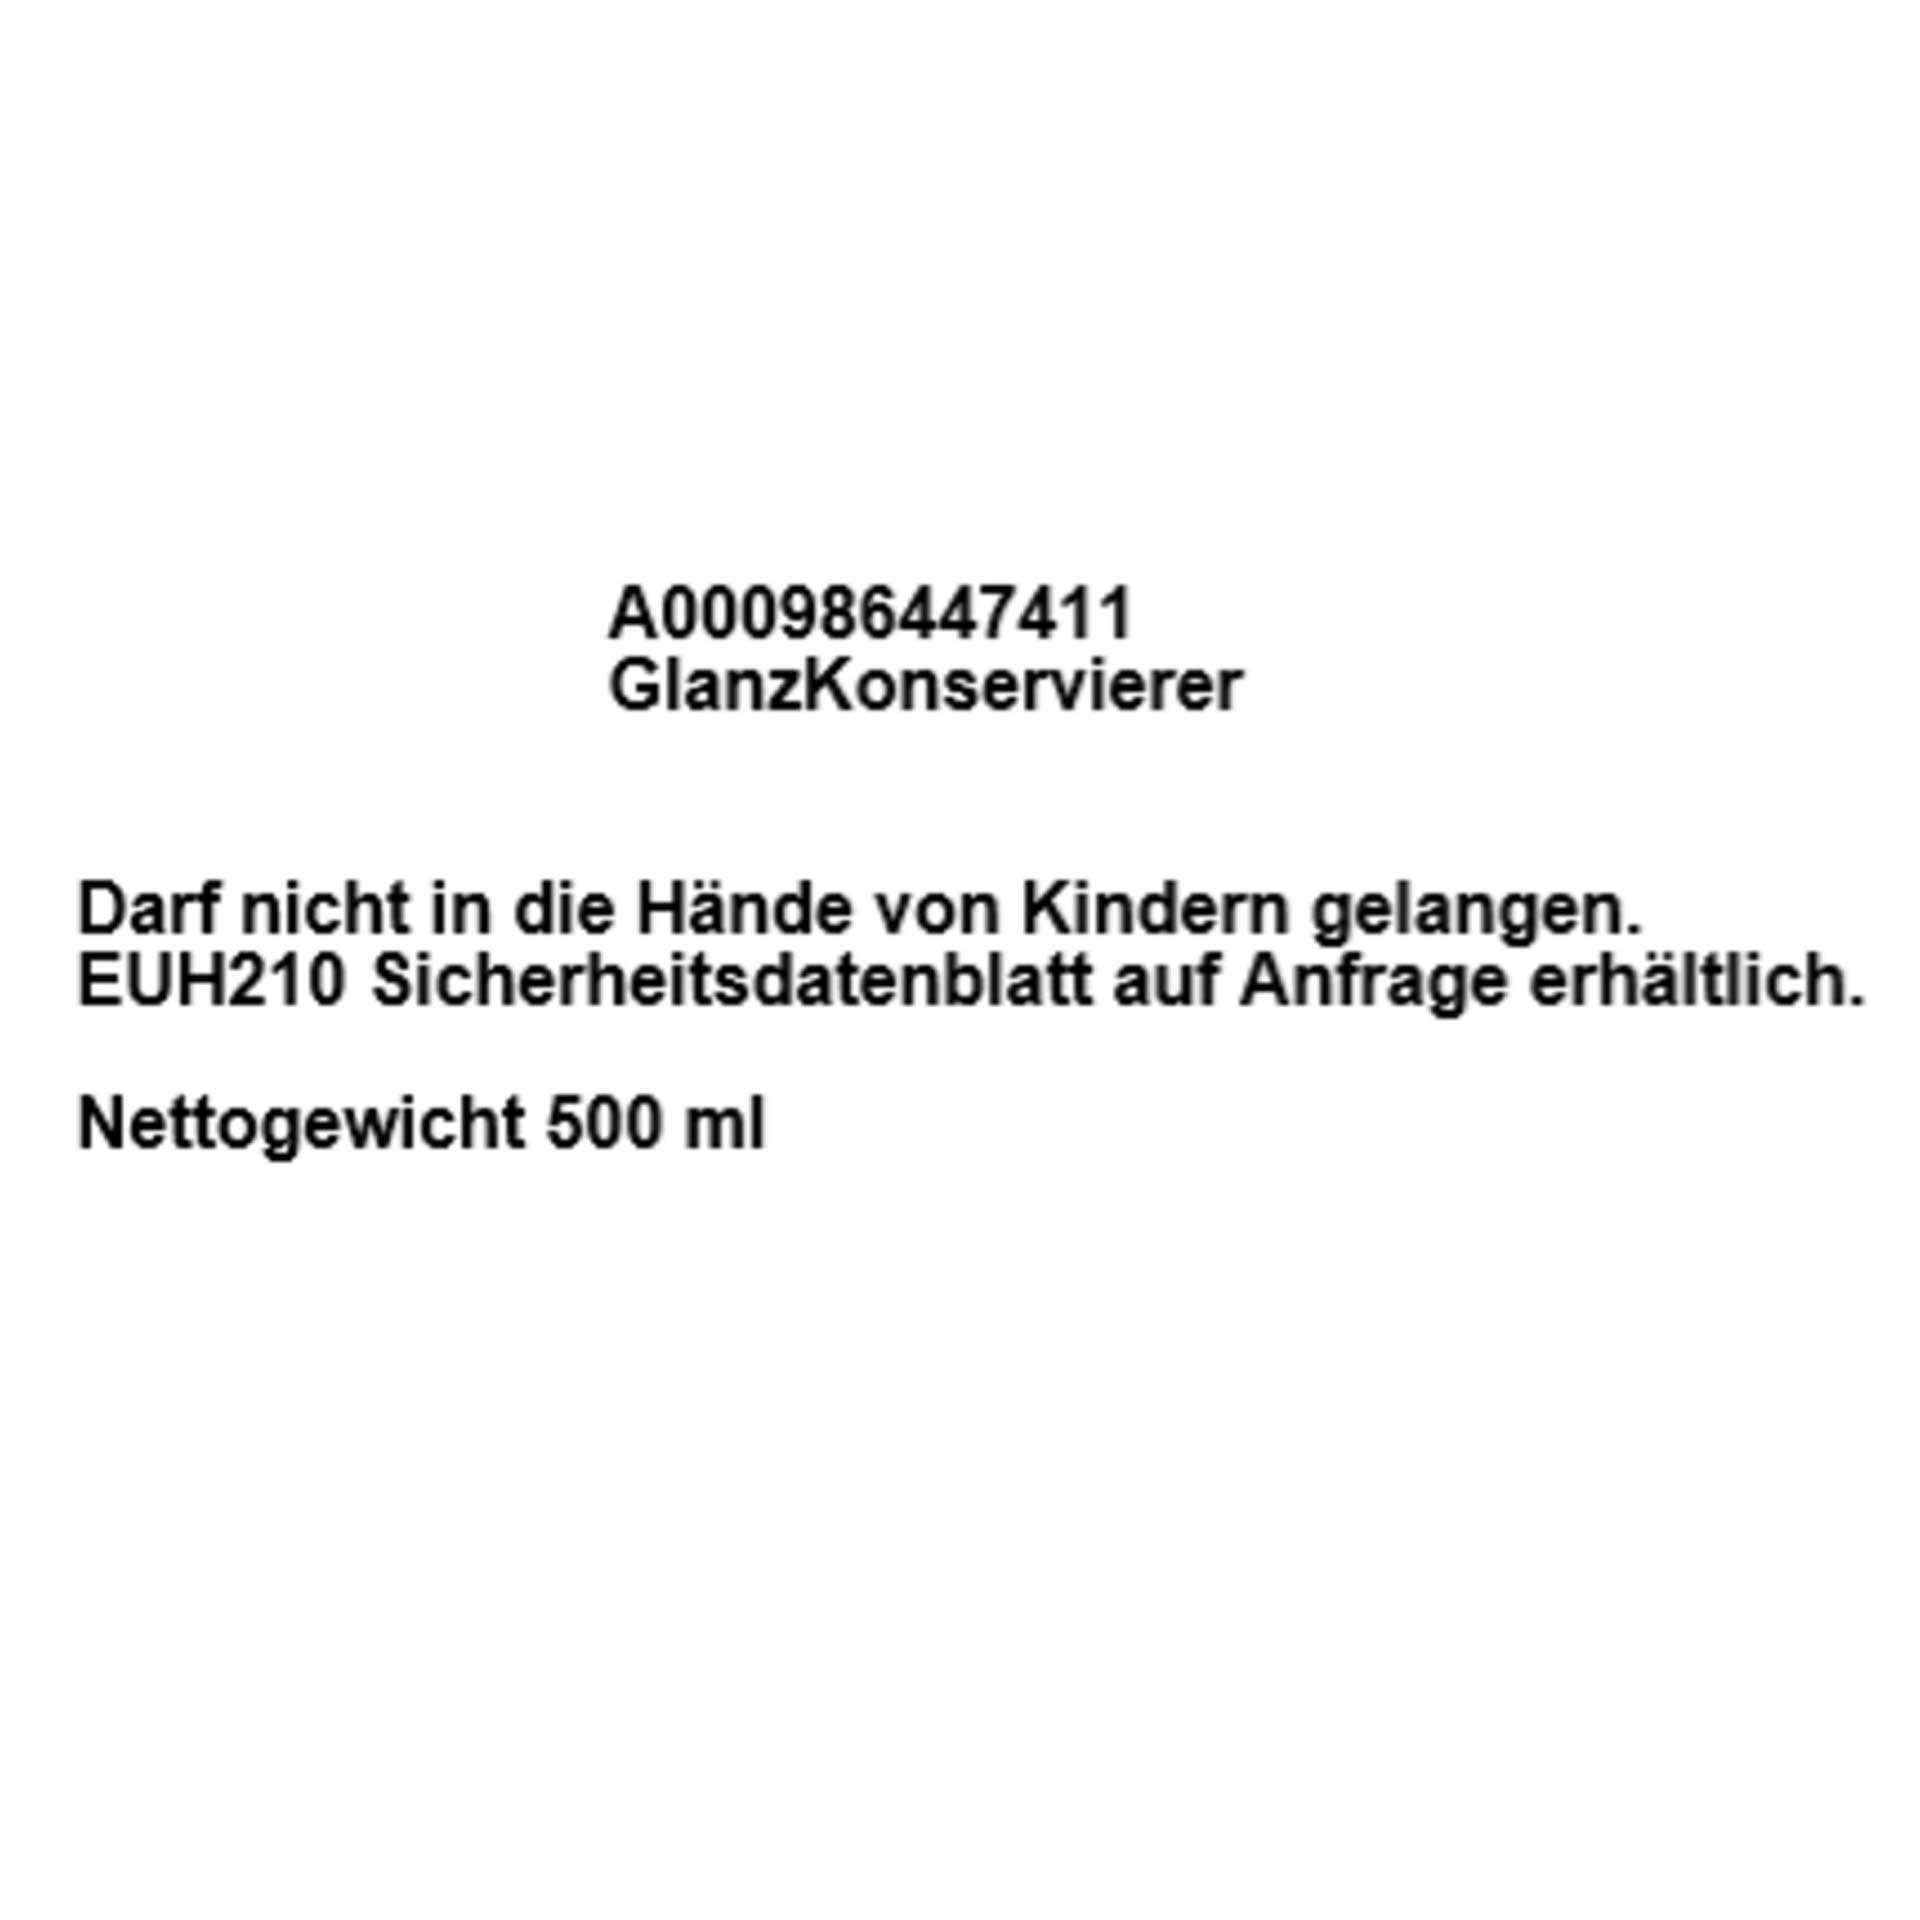 Mercedes-Benz GlanzKonservierer 500 ml A000986447411